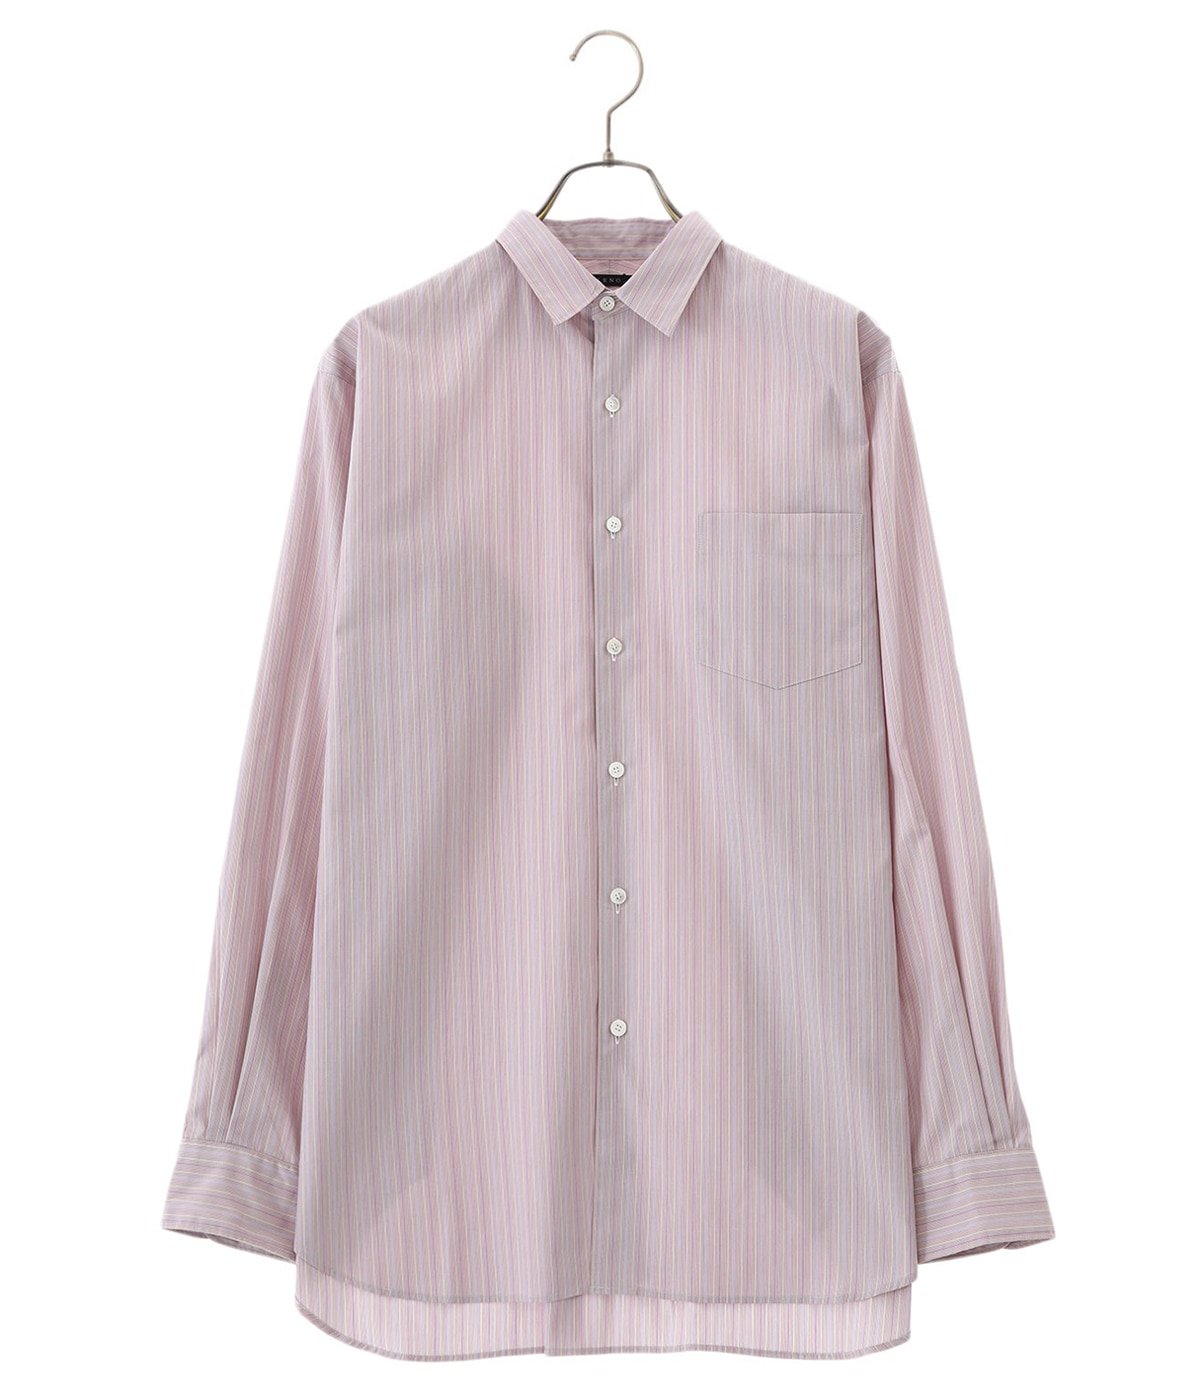 Oversized Shirt Stripe Leno リノ トップス 長袖シャツ メンズ レディース の通販 Arknets アークネッツ 公式通販 正規取扱店